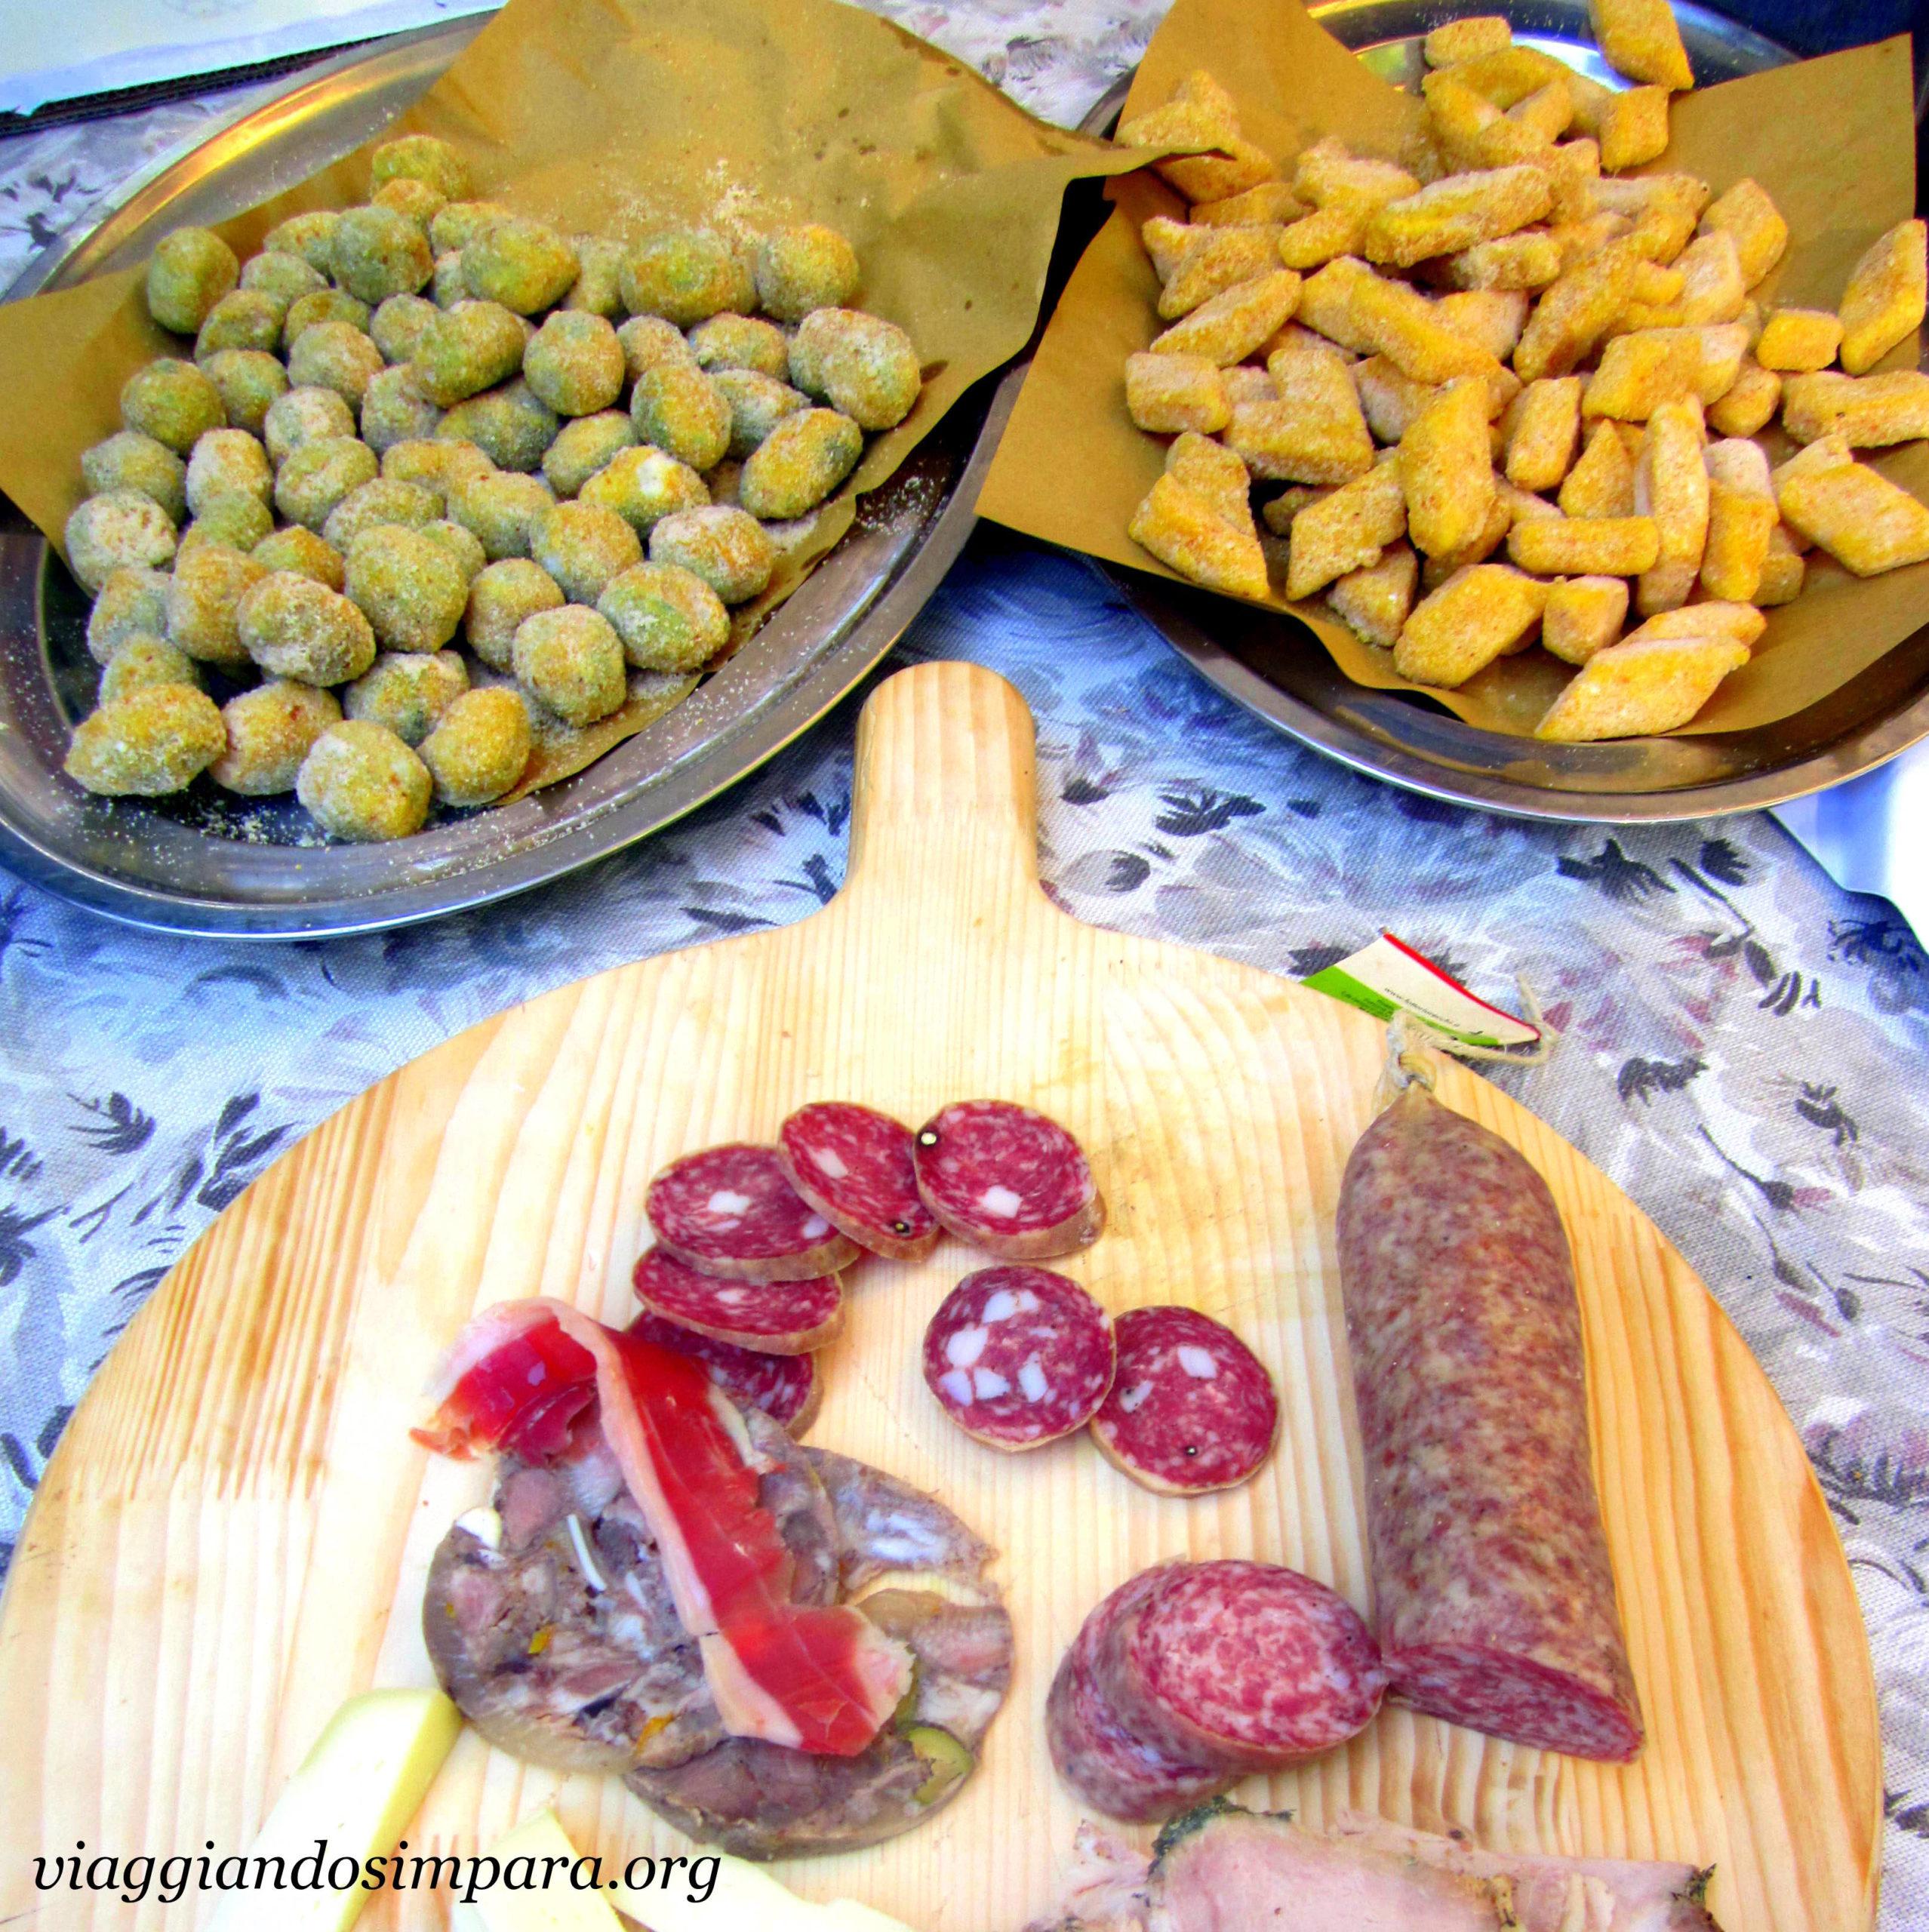 Piatti tipici: i cremini, le olive all'ascolana ed i formaggi e salumi locali